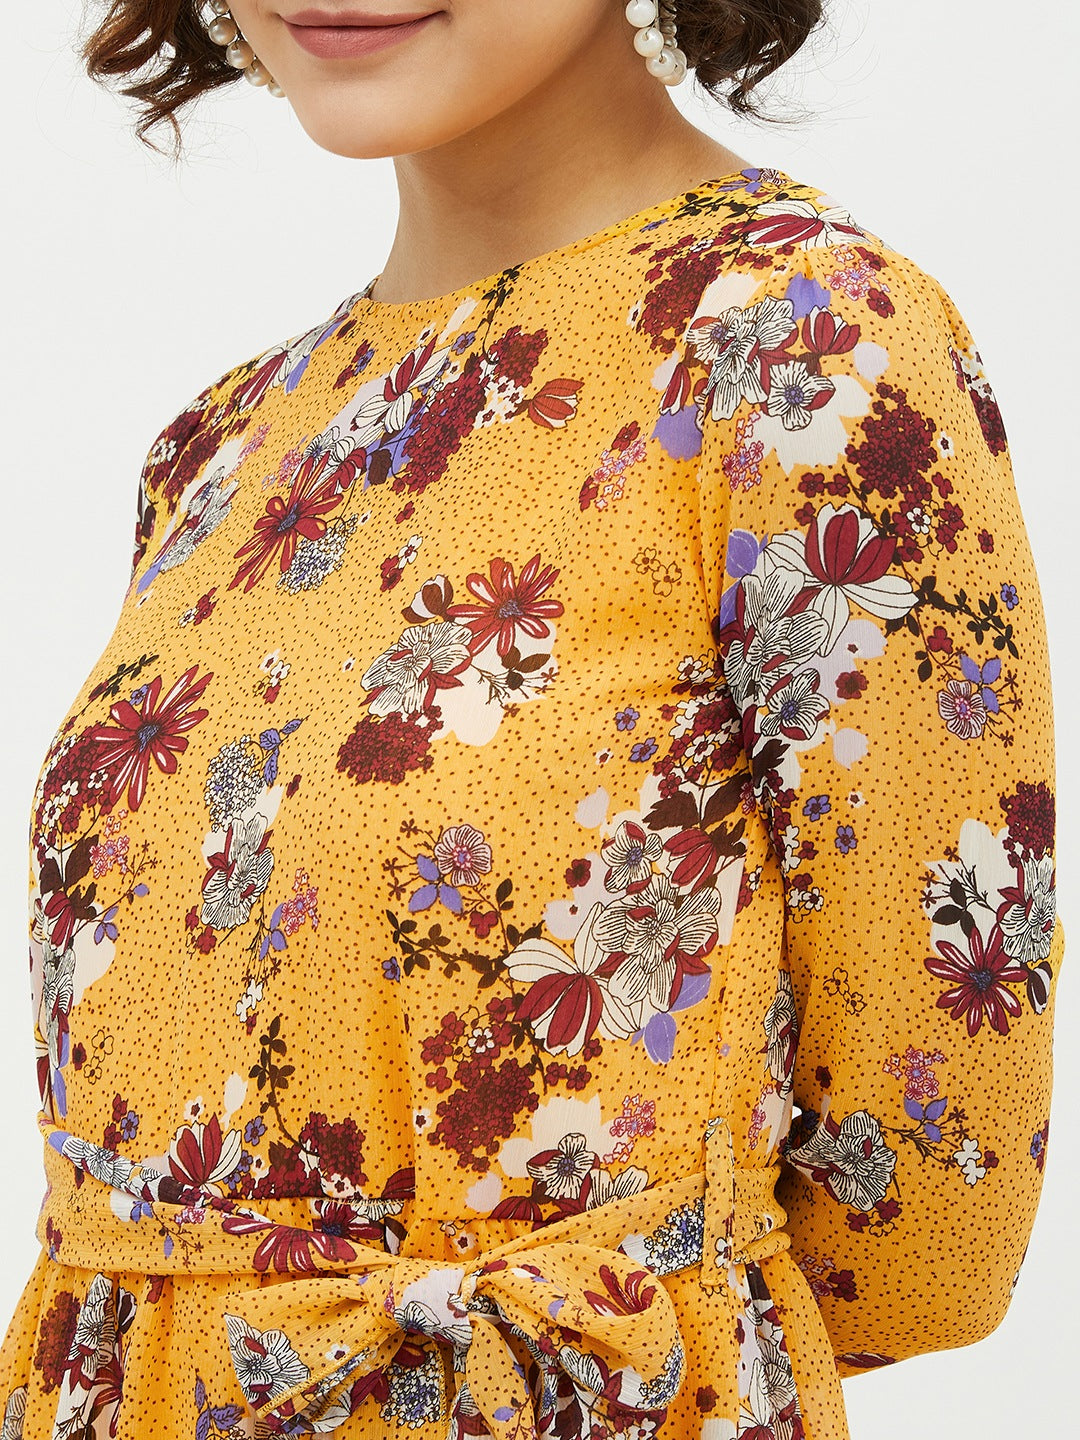 Women's Yellow Printed Floral Long Dress - StyleStone